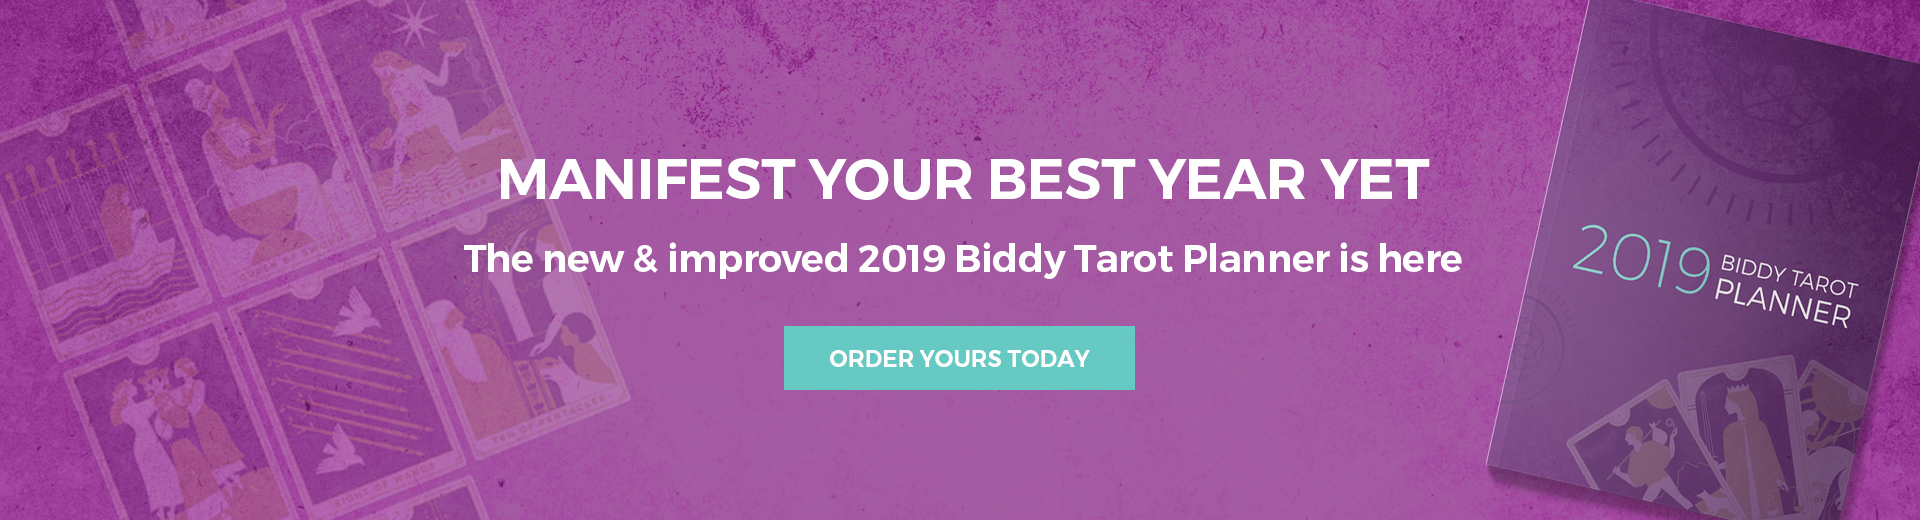 Biddy Tarot Planner